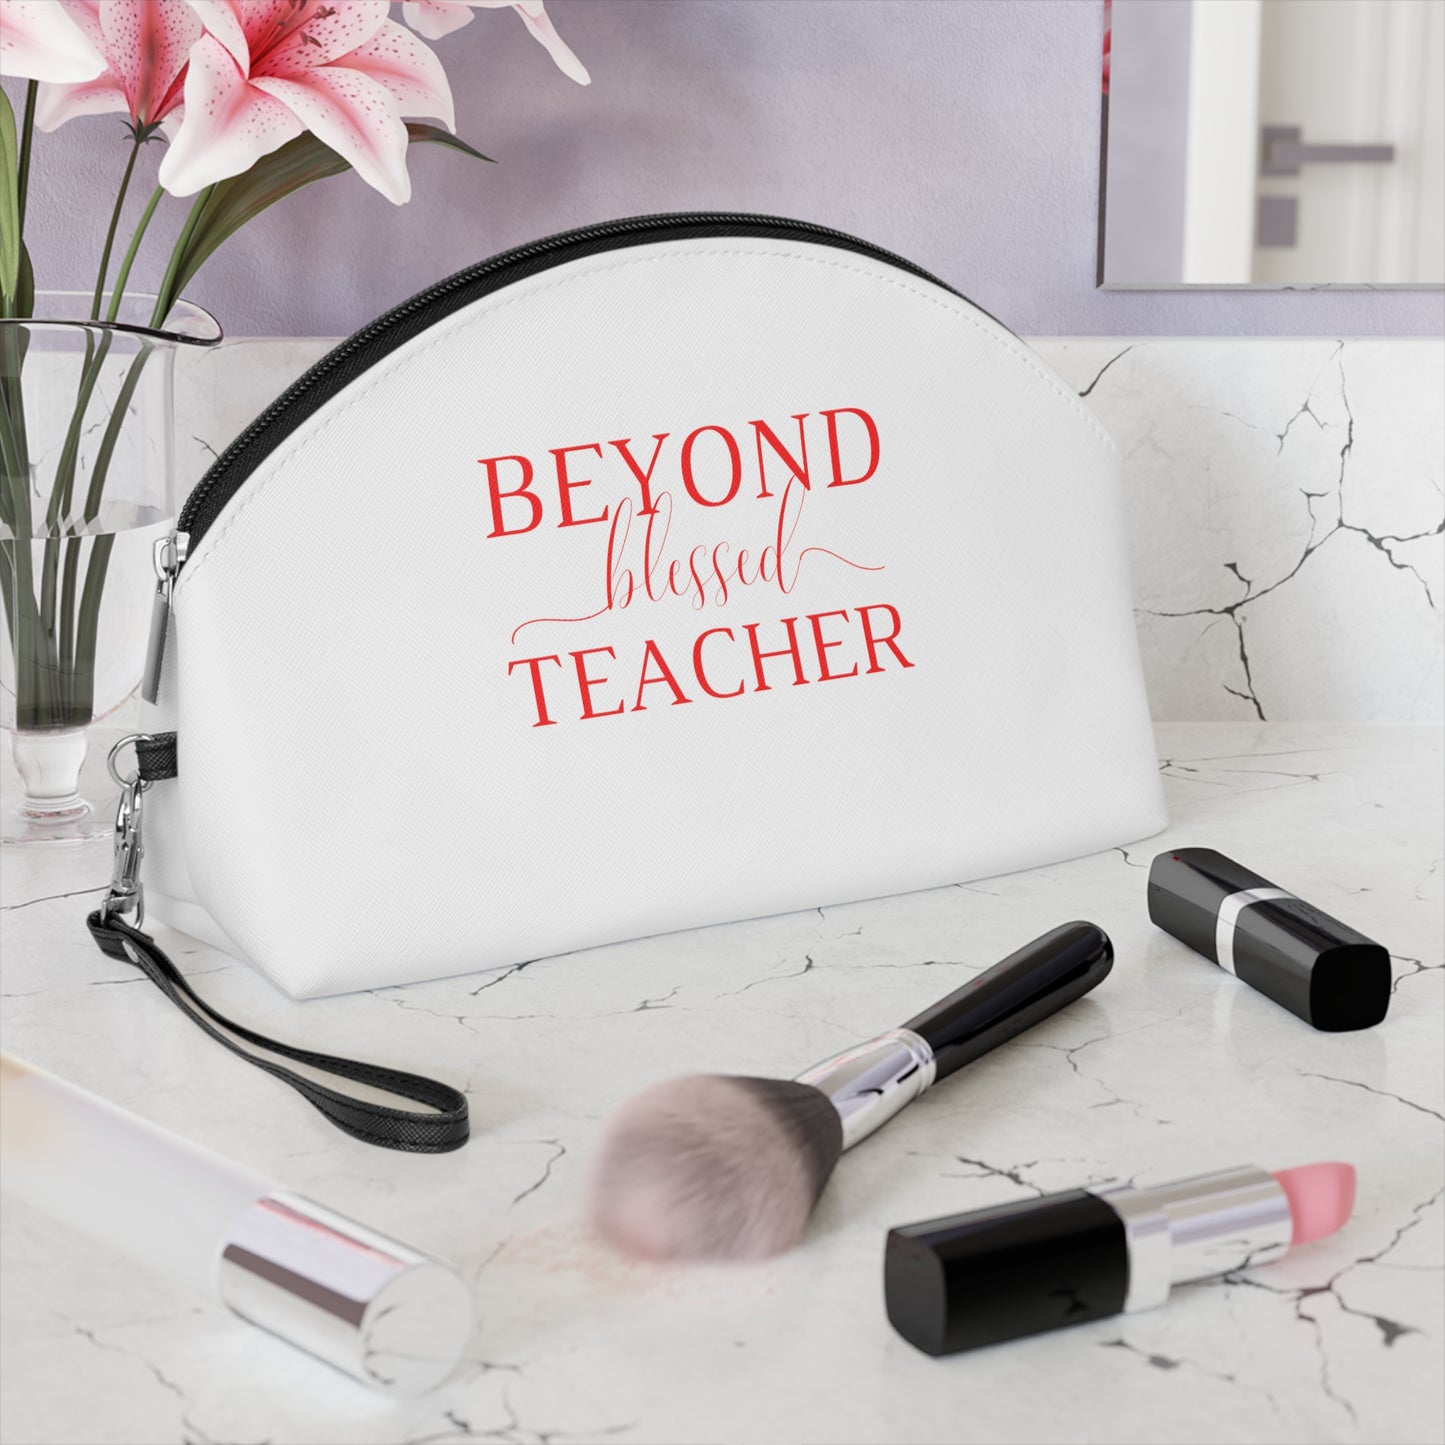 Beyond Blessed Teacher - Makeup Bag - Red